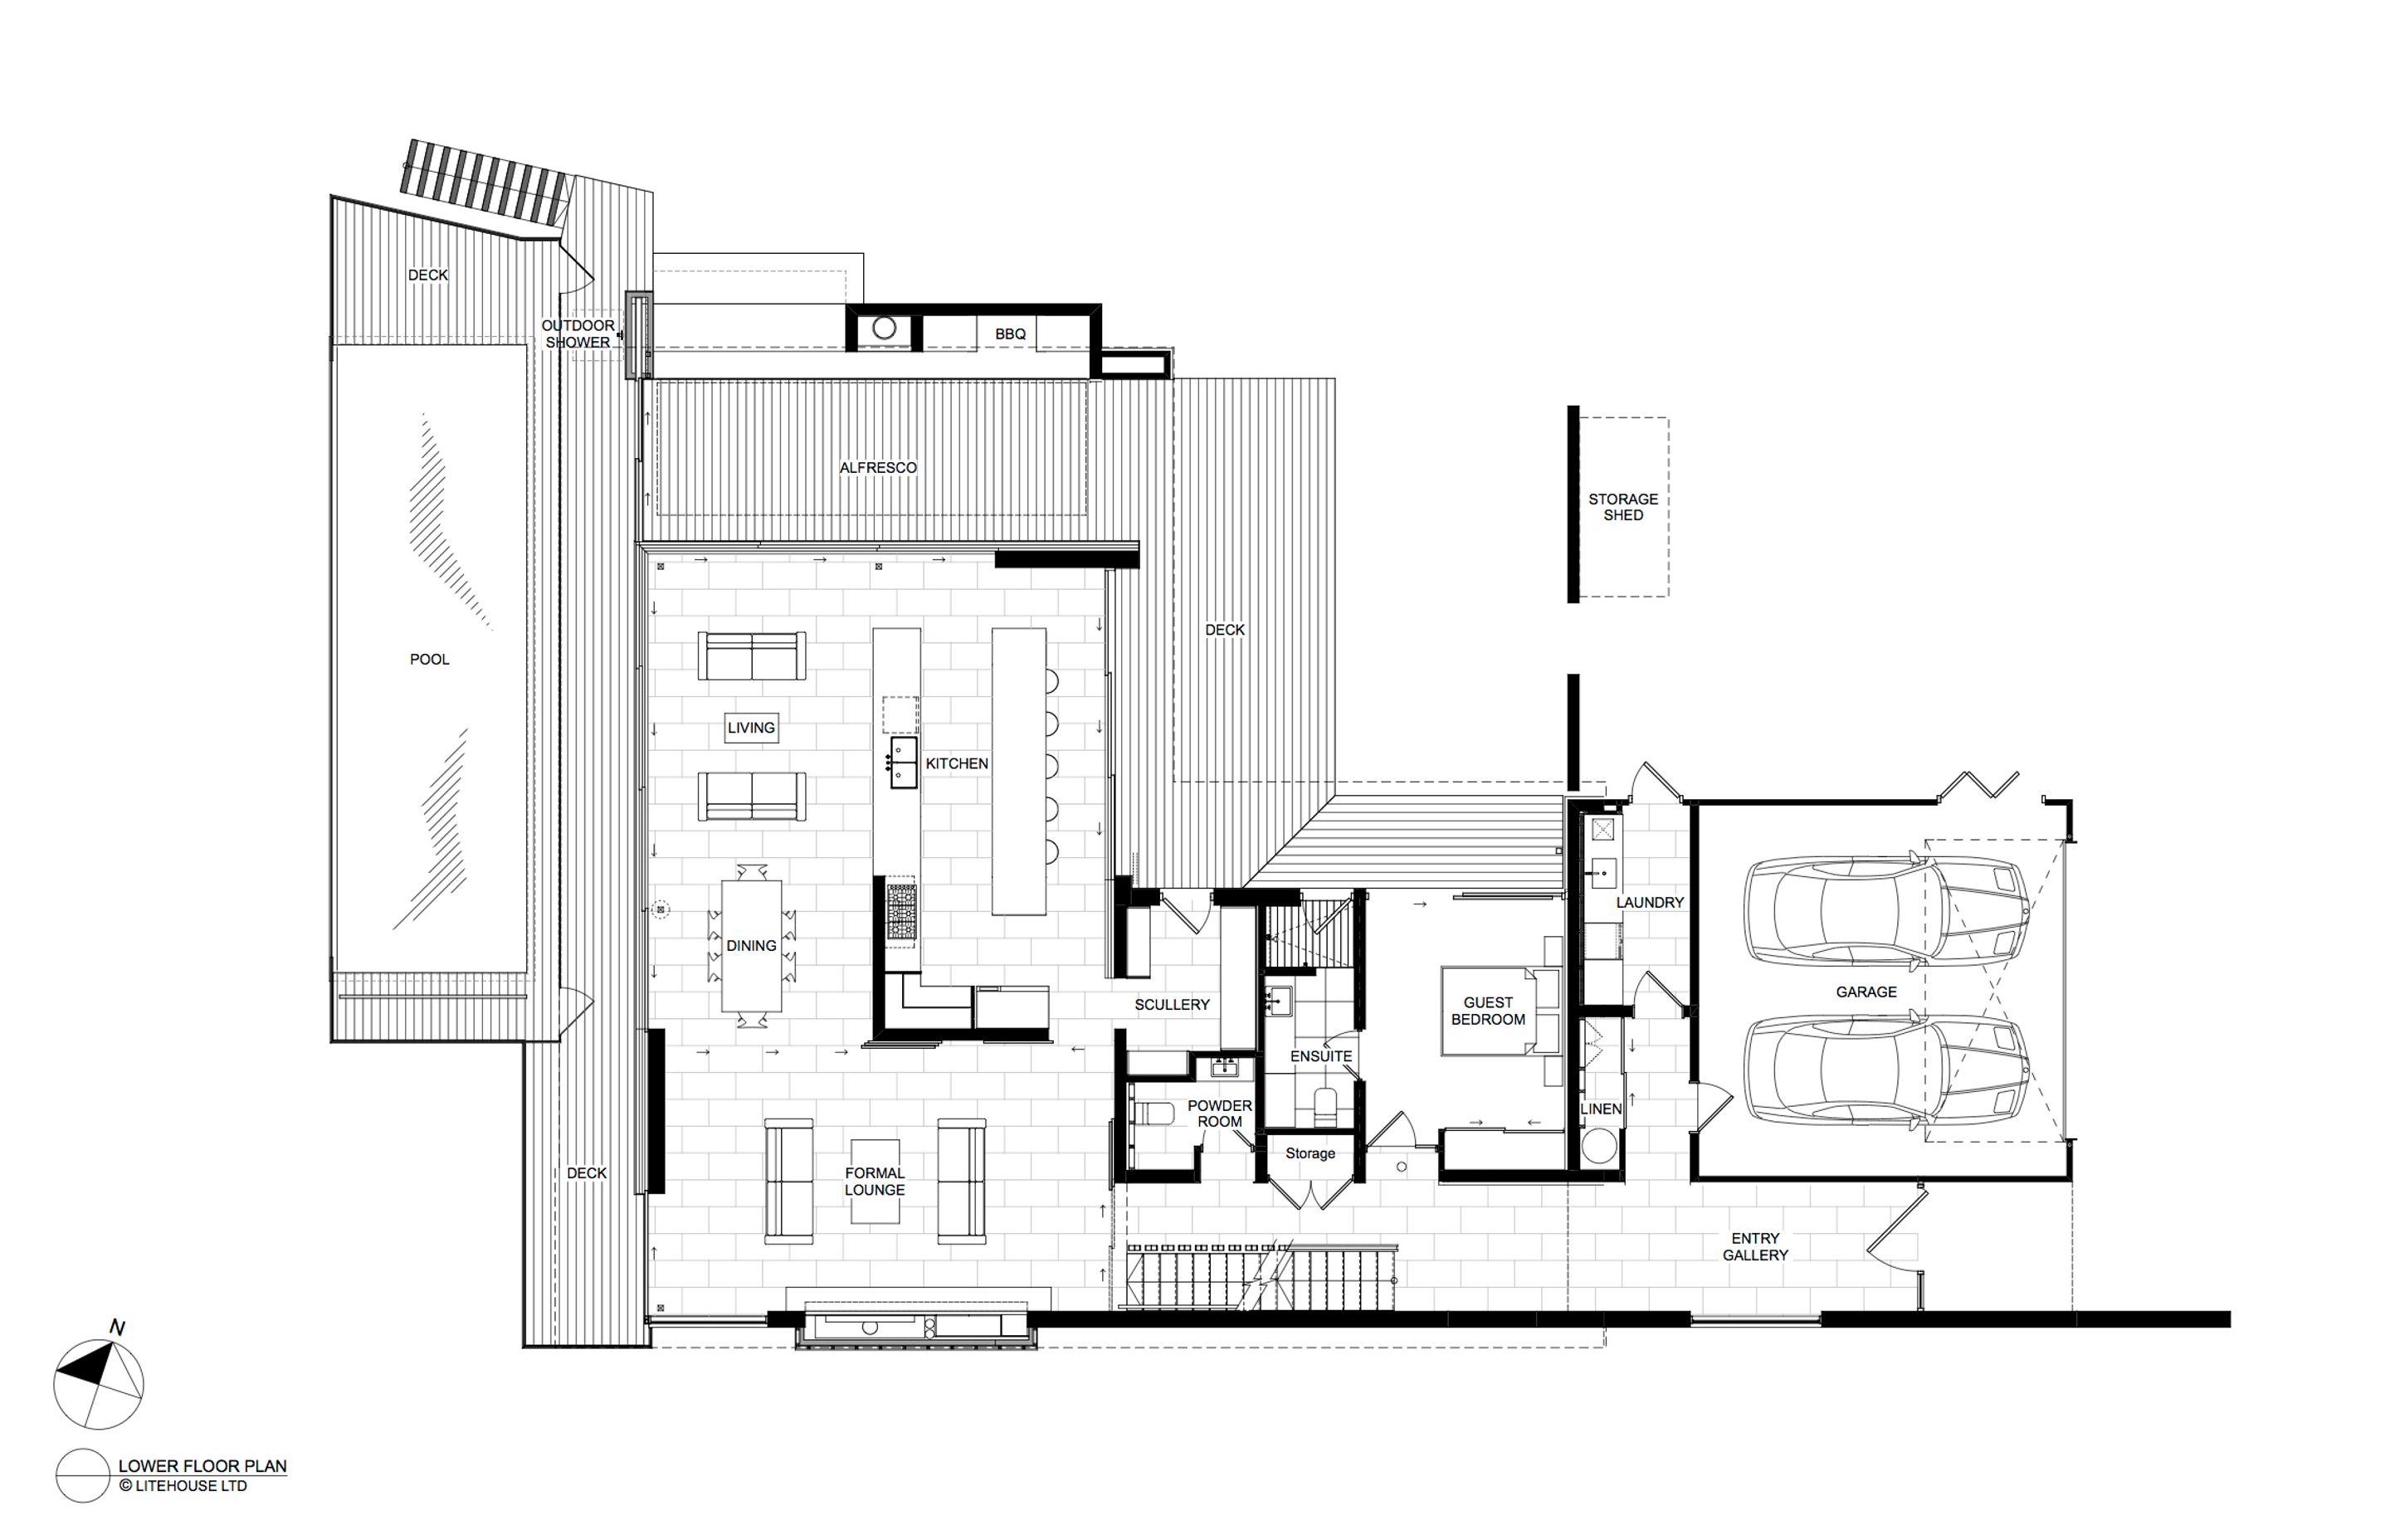 Ground-floor plan by Lite House.